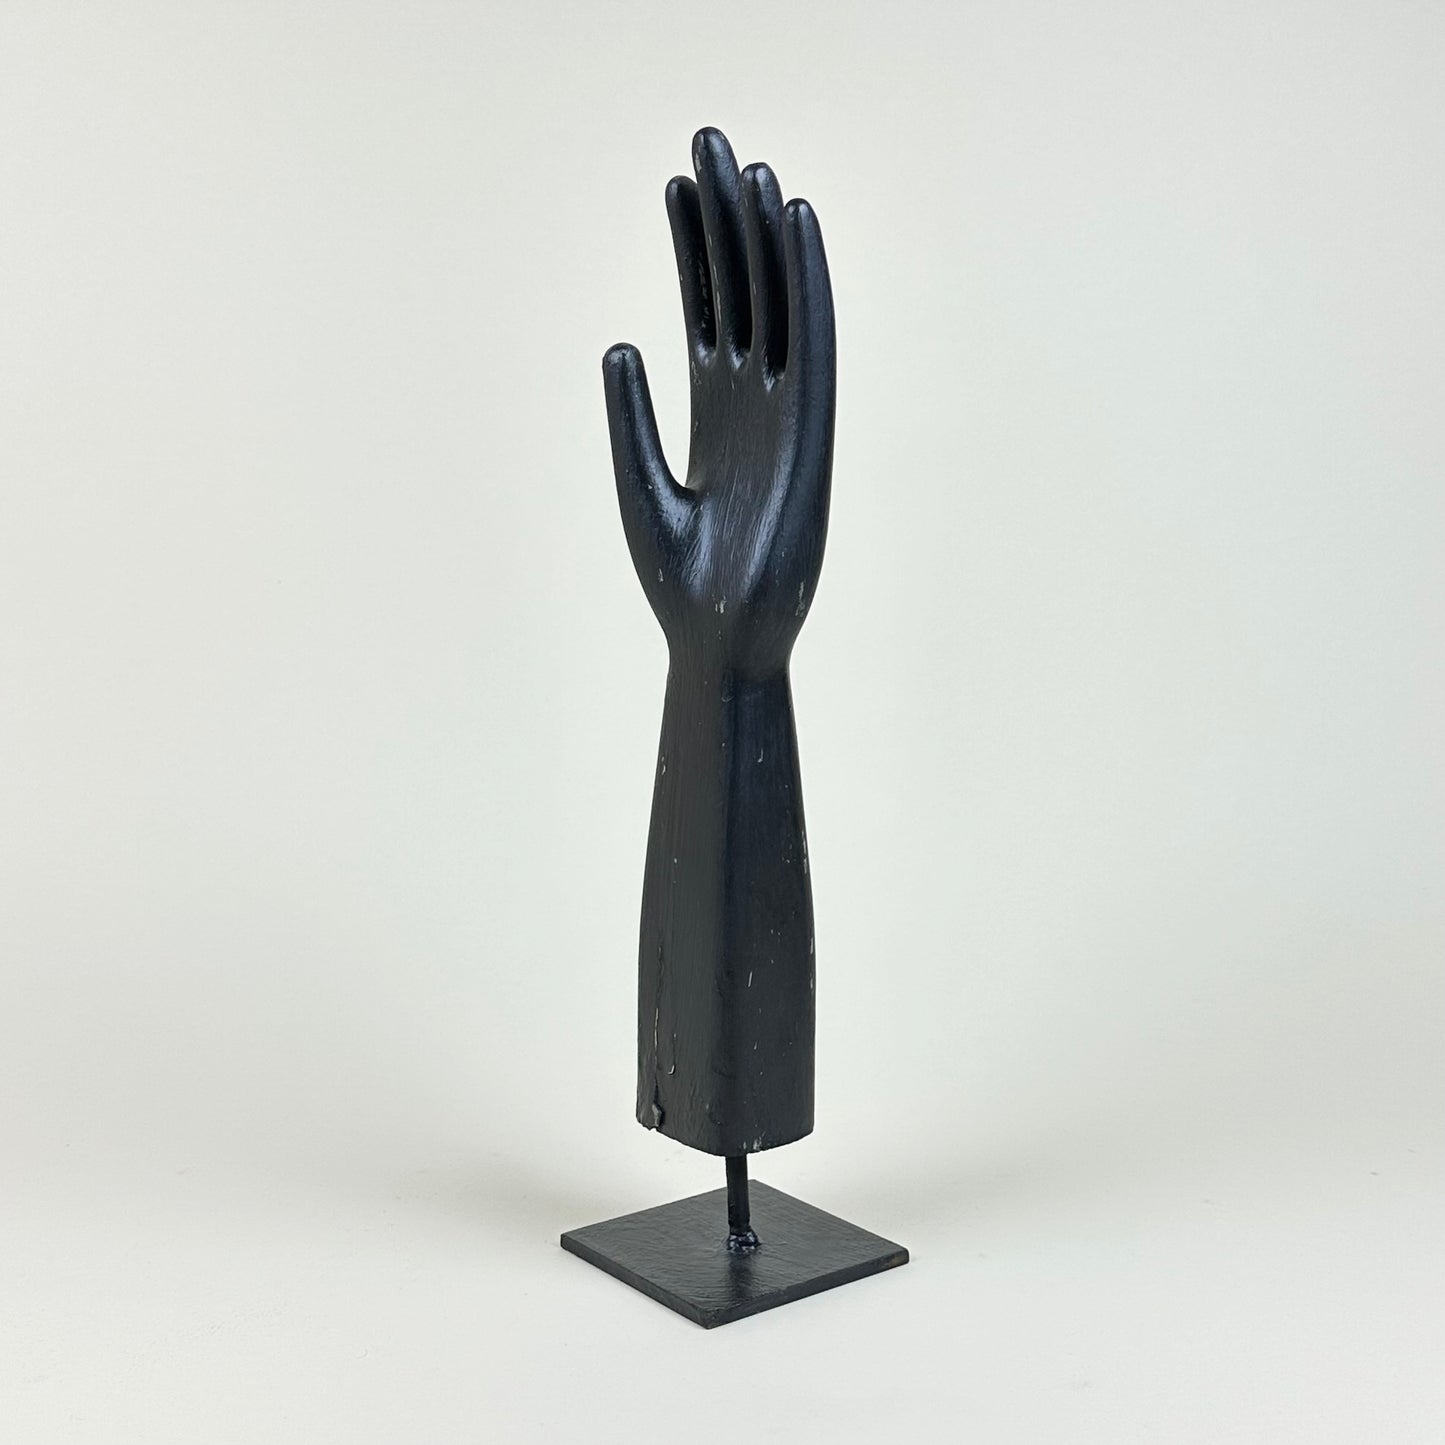 Black, wooden hand sculpture, vintage